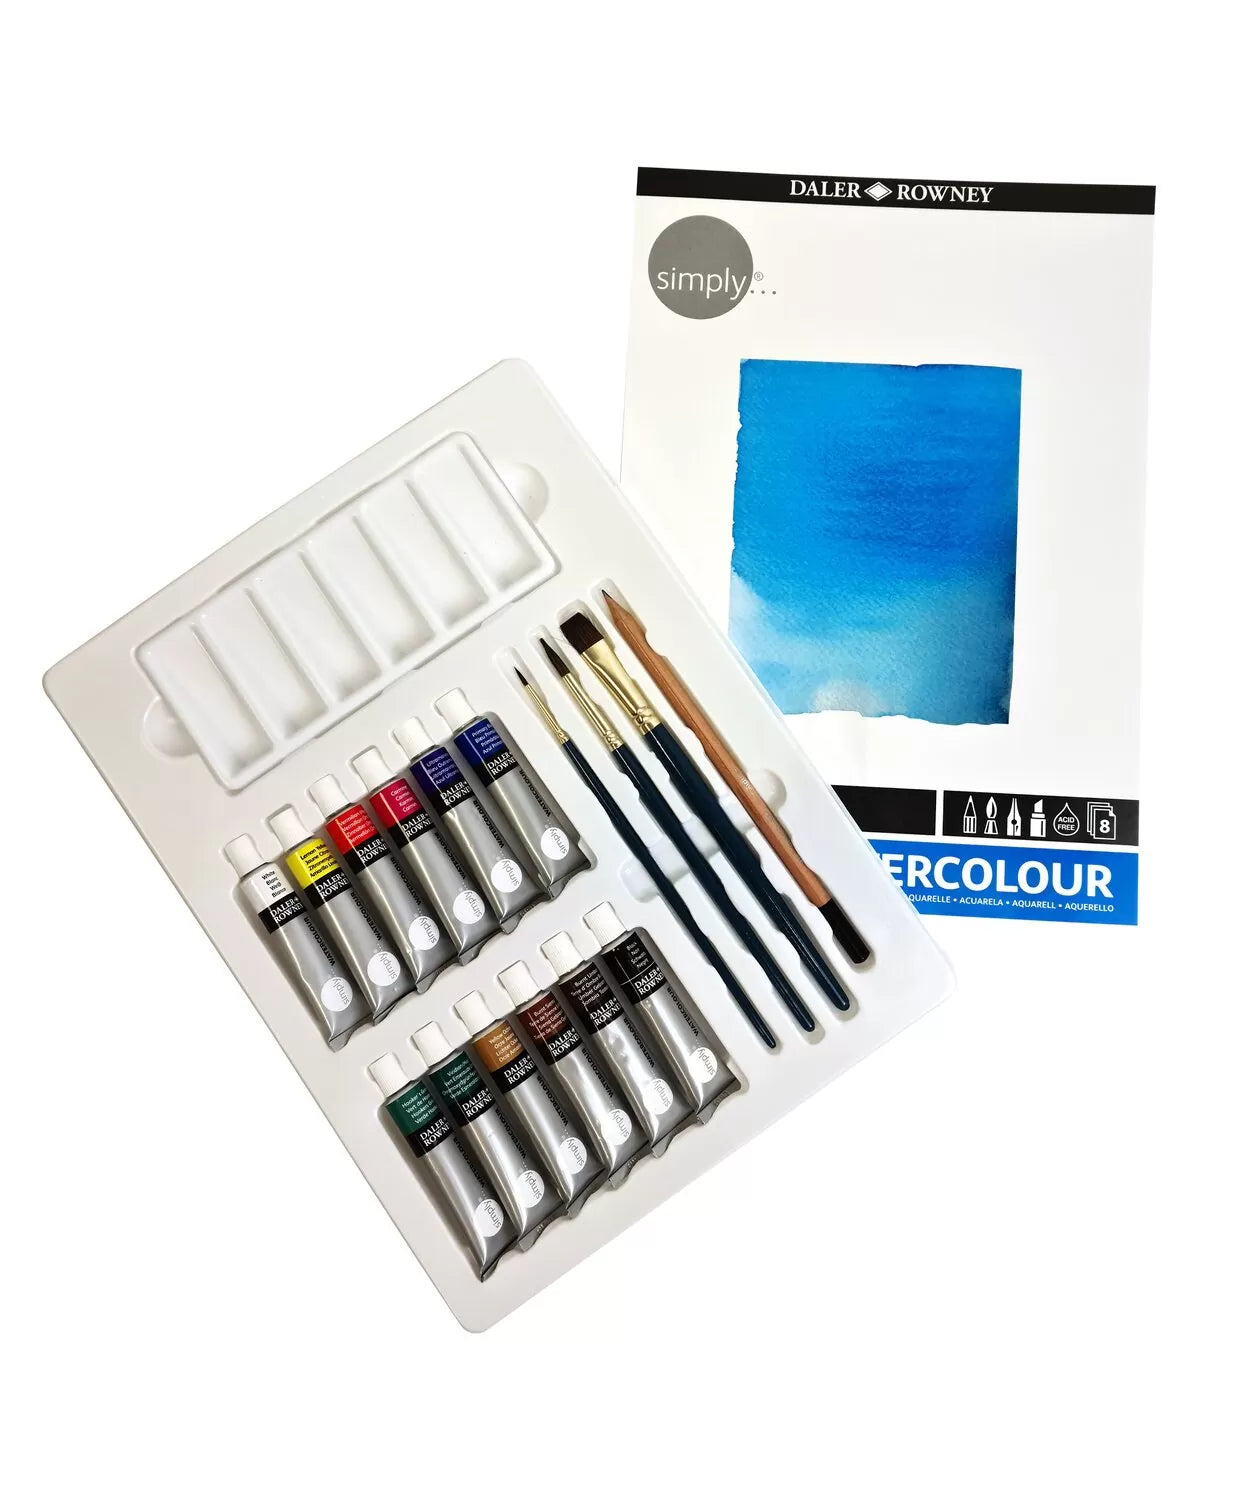 Daler Rowney Aquafine 48-Piece Watercolor Studio Set